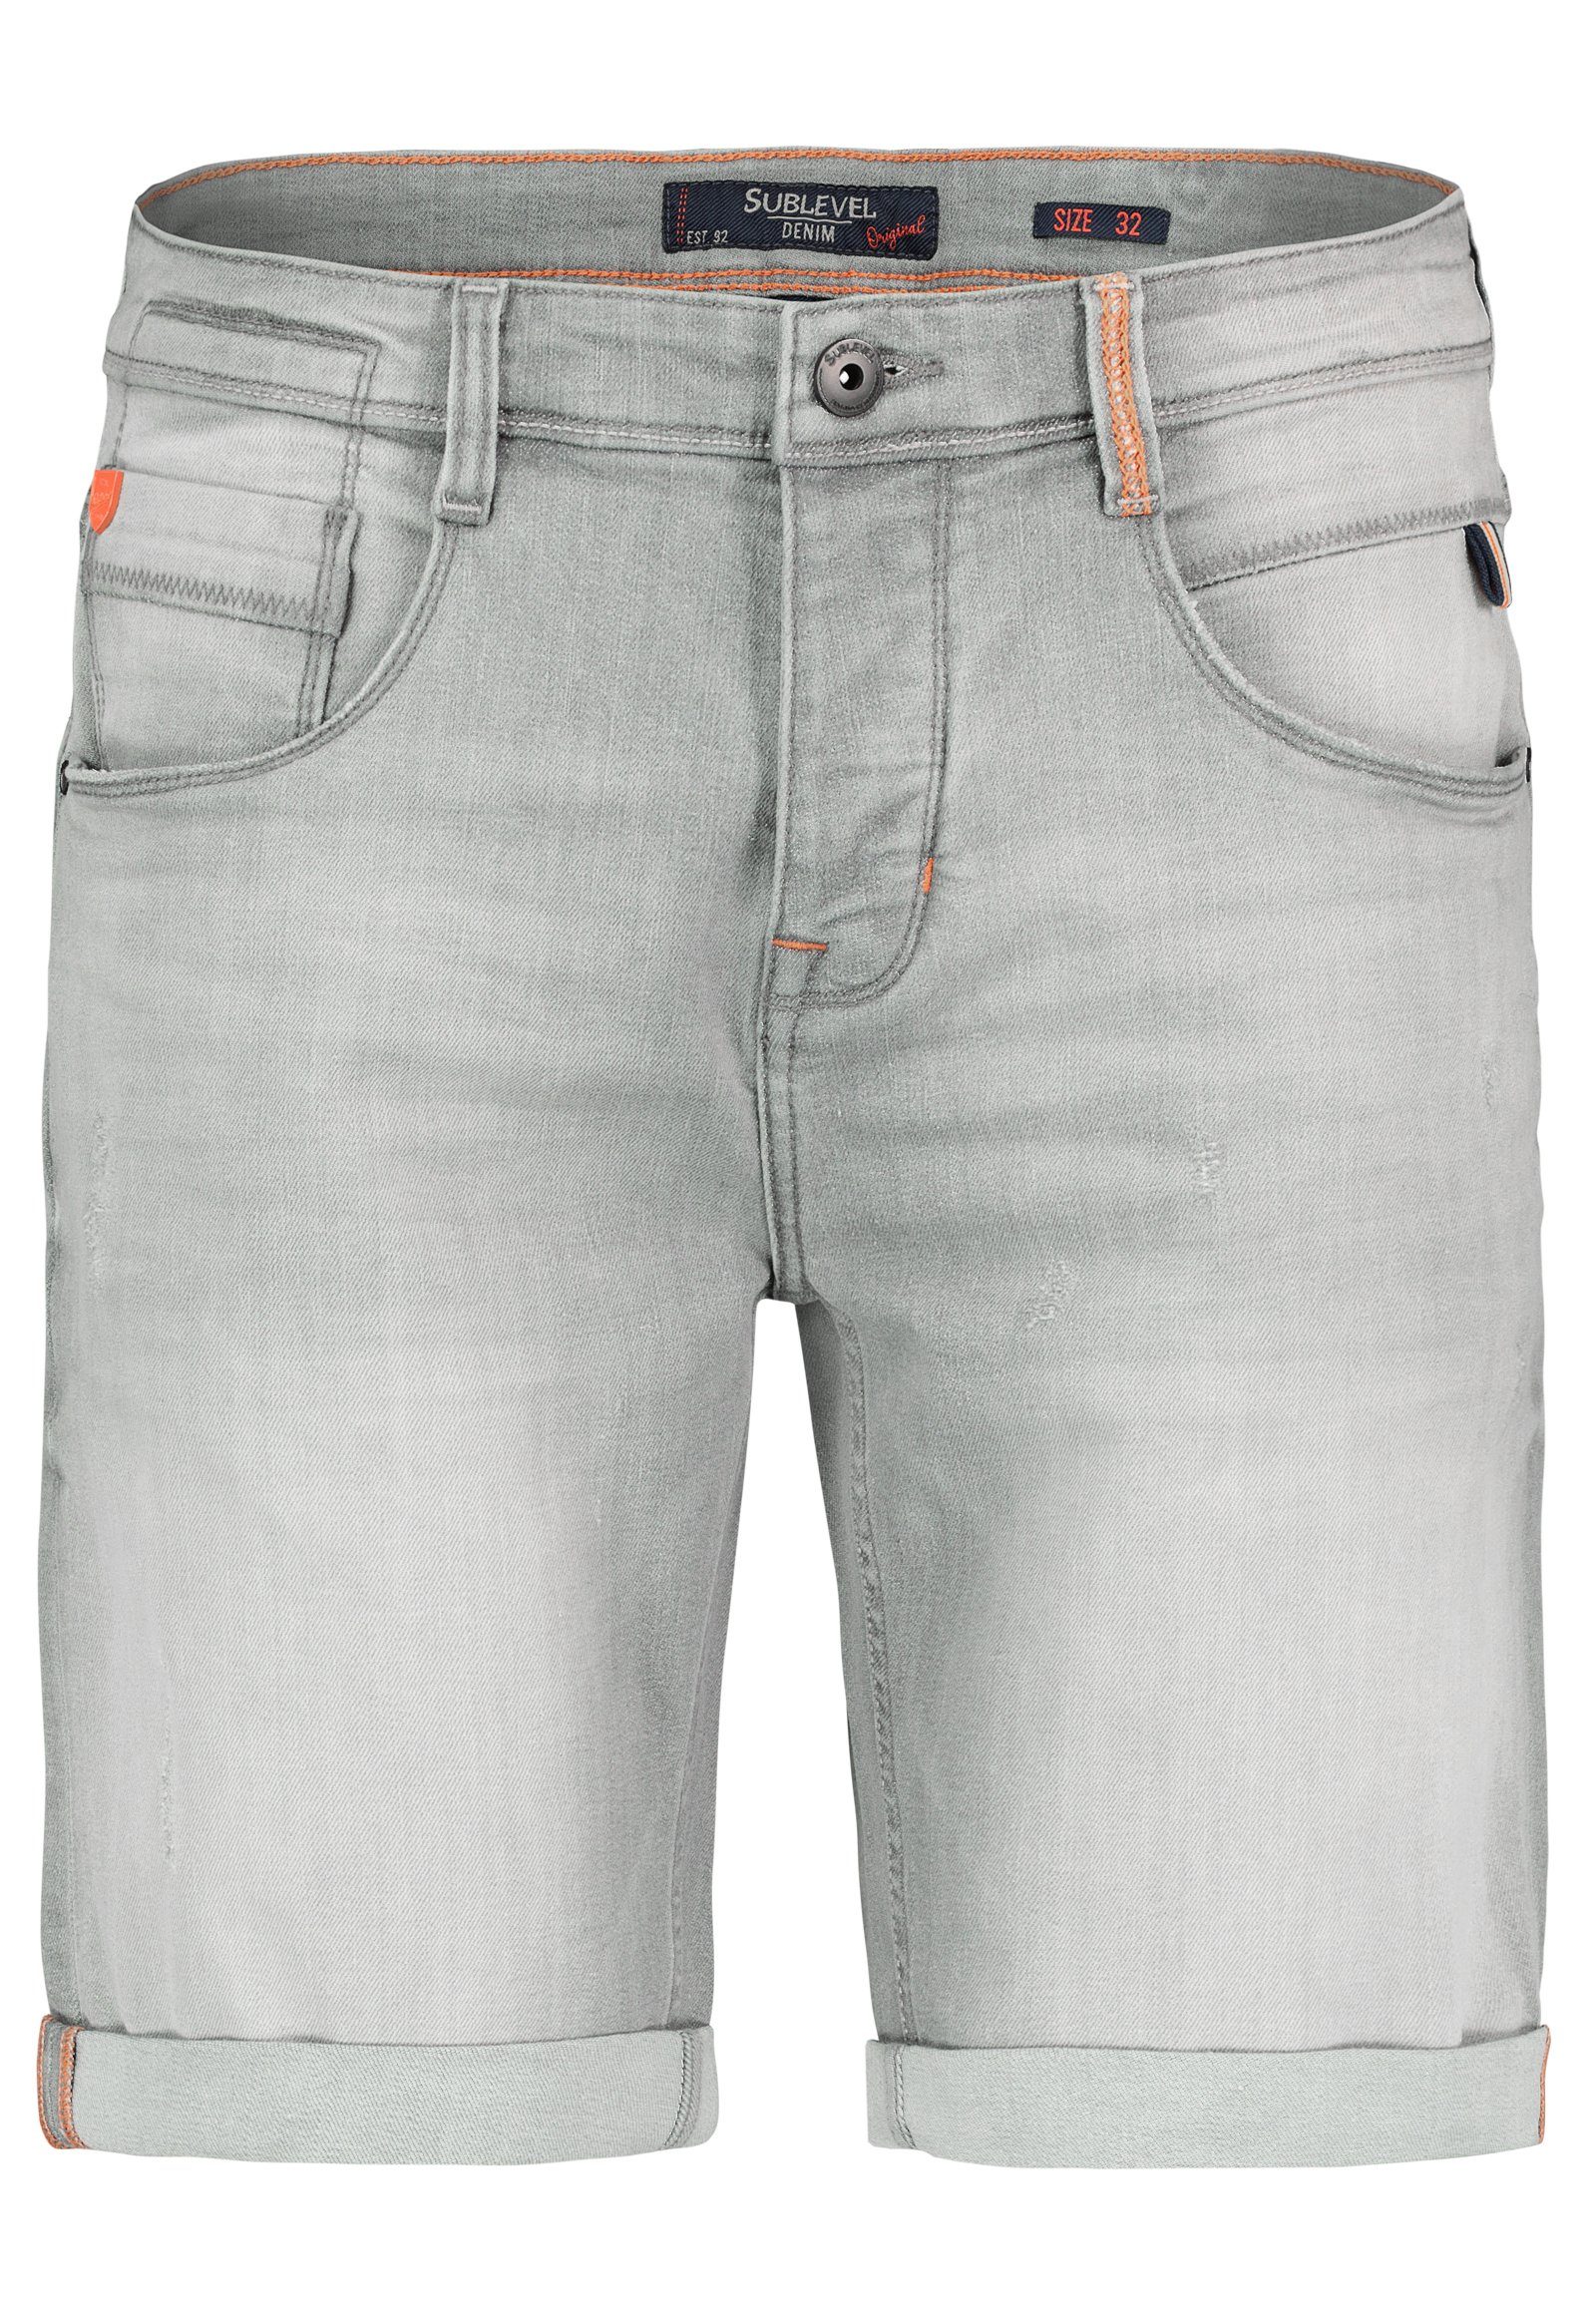 Hose kurze Denim Jeans Shorts Jogging Herren Urban Sweat Hell-Grau Freizeit Bermuda Surface Bermudas